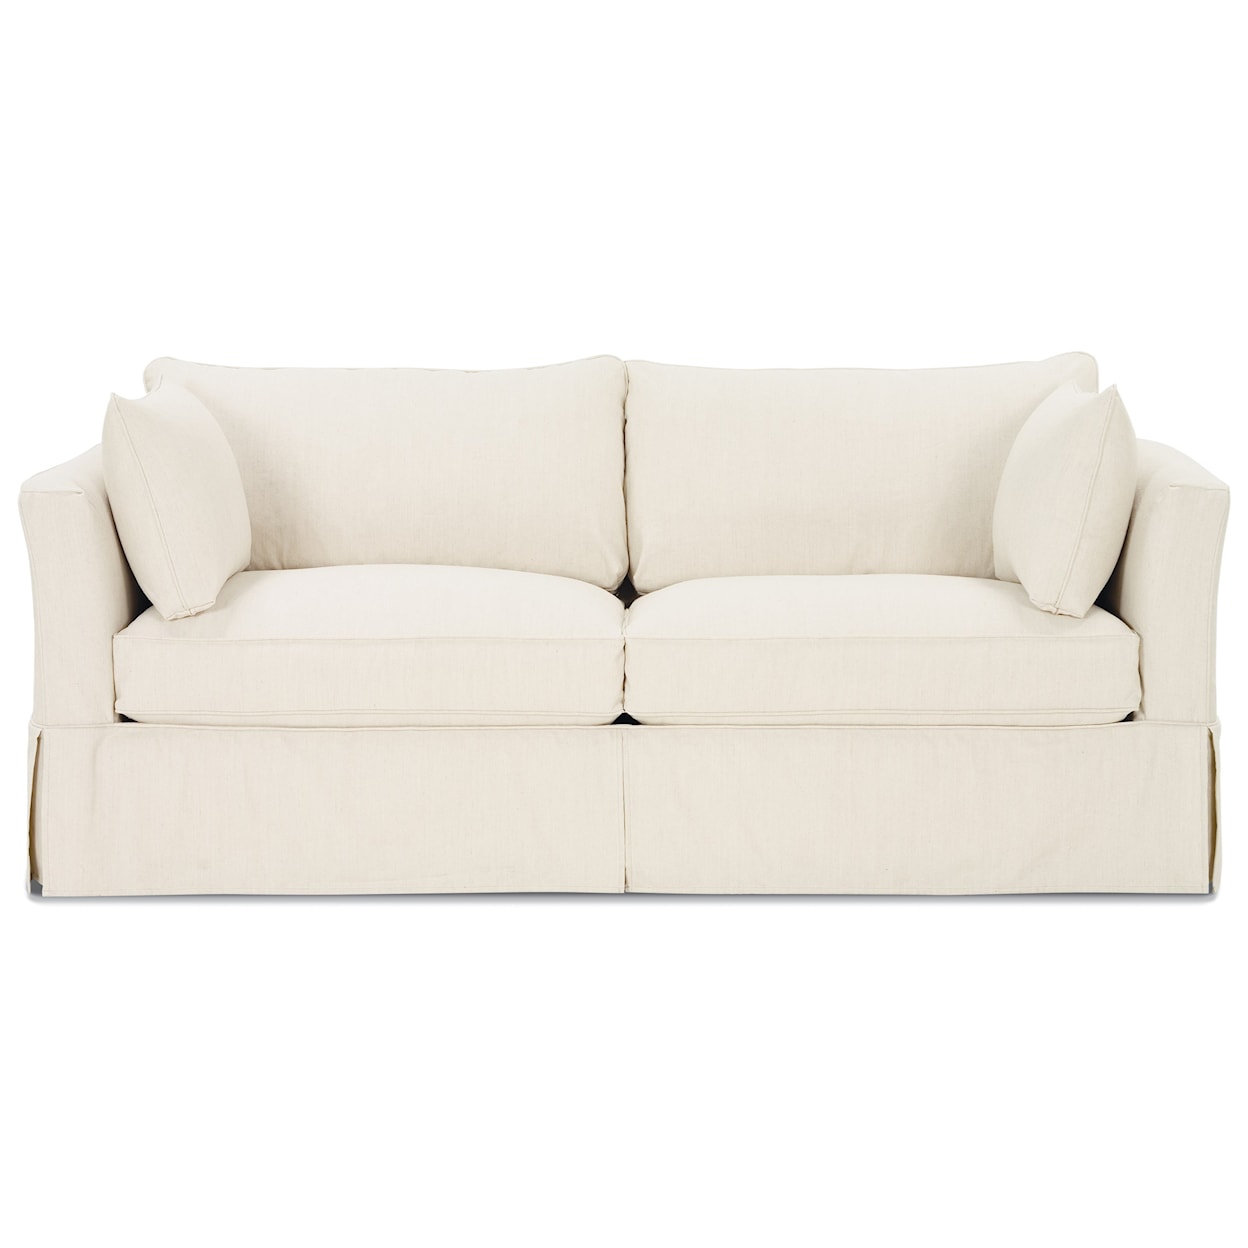 Rowe Darby Slipcover Sofa